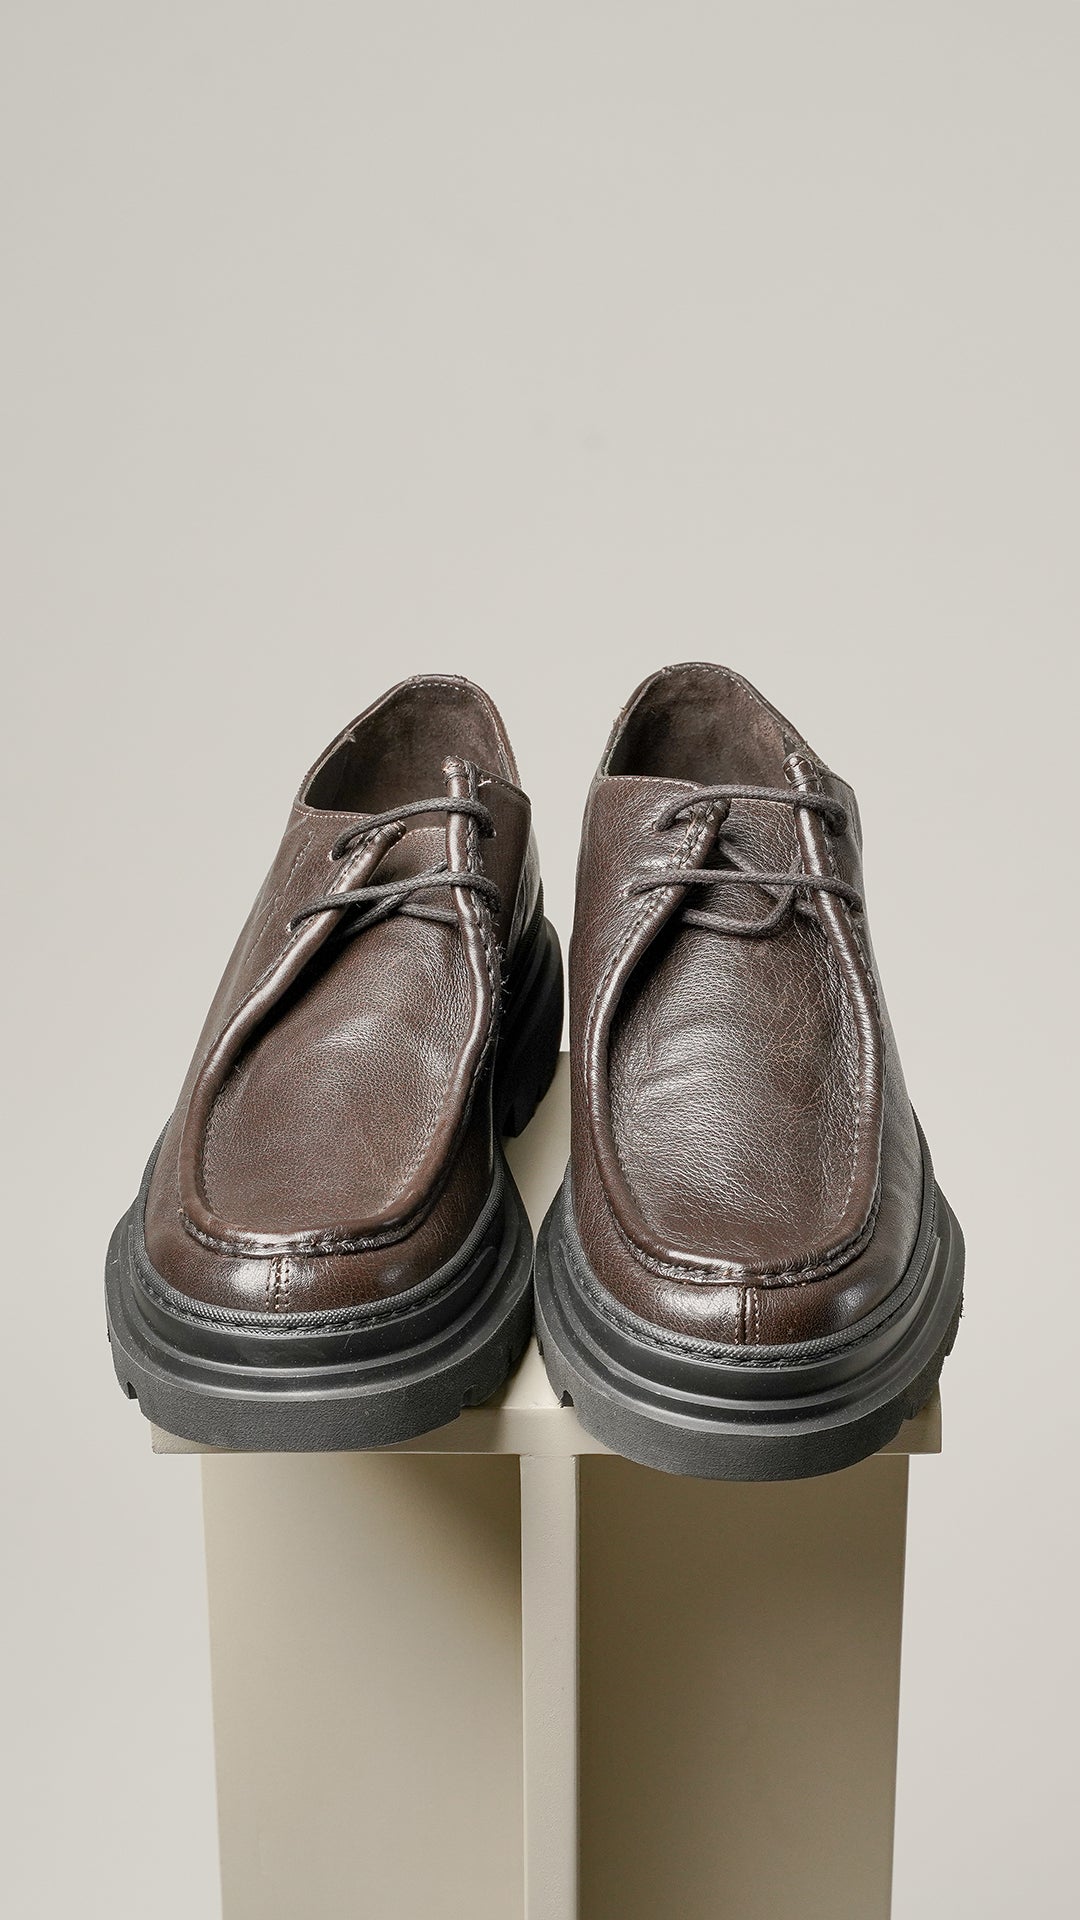 antica cuoieria kalveskind sko med gummisål